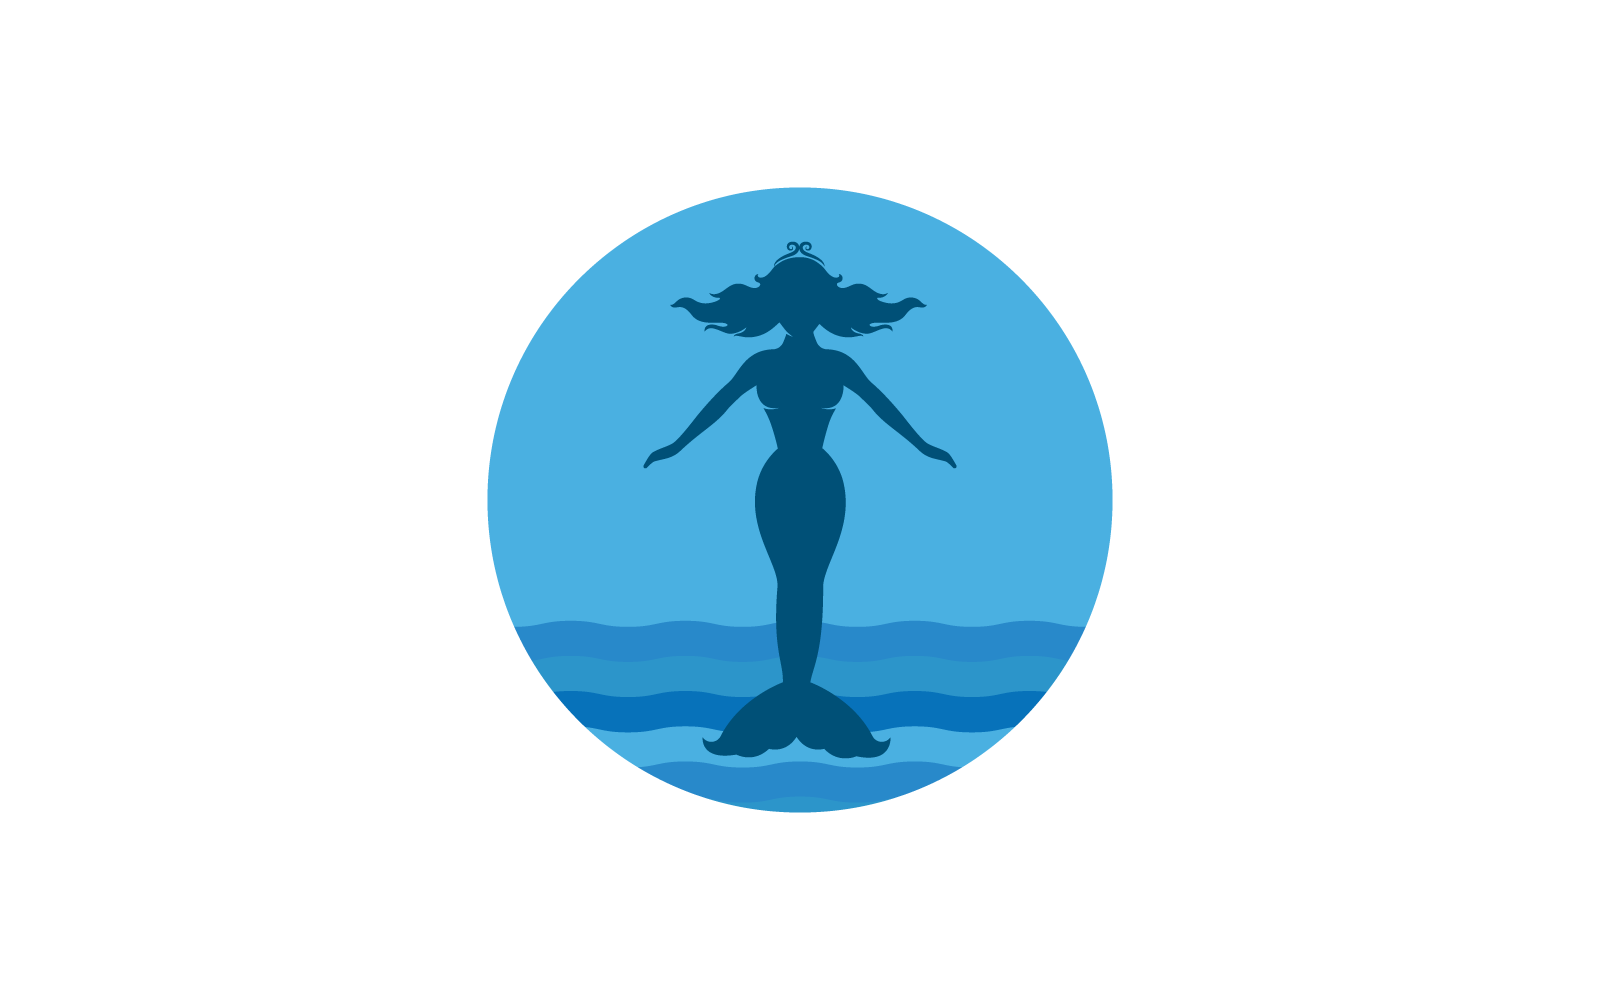 Mermaid illustration logo template vector flat design